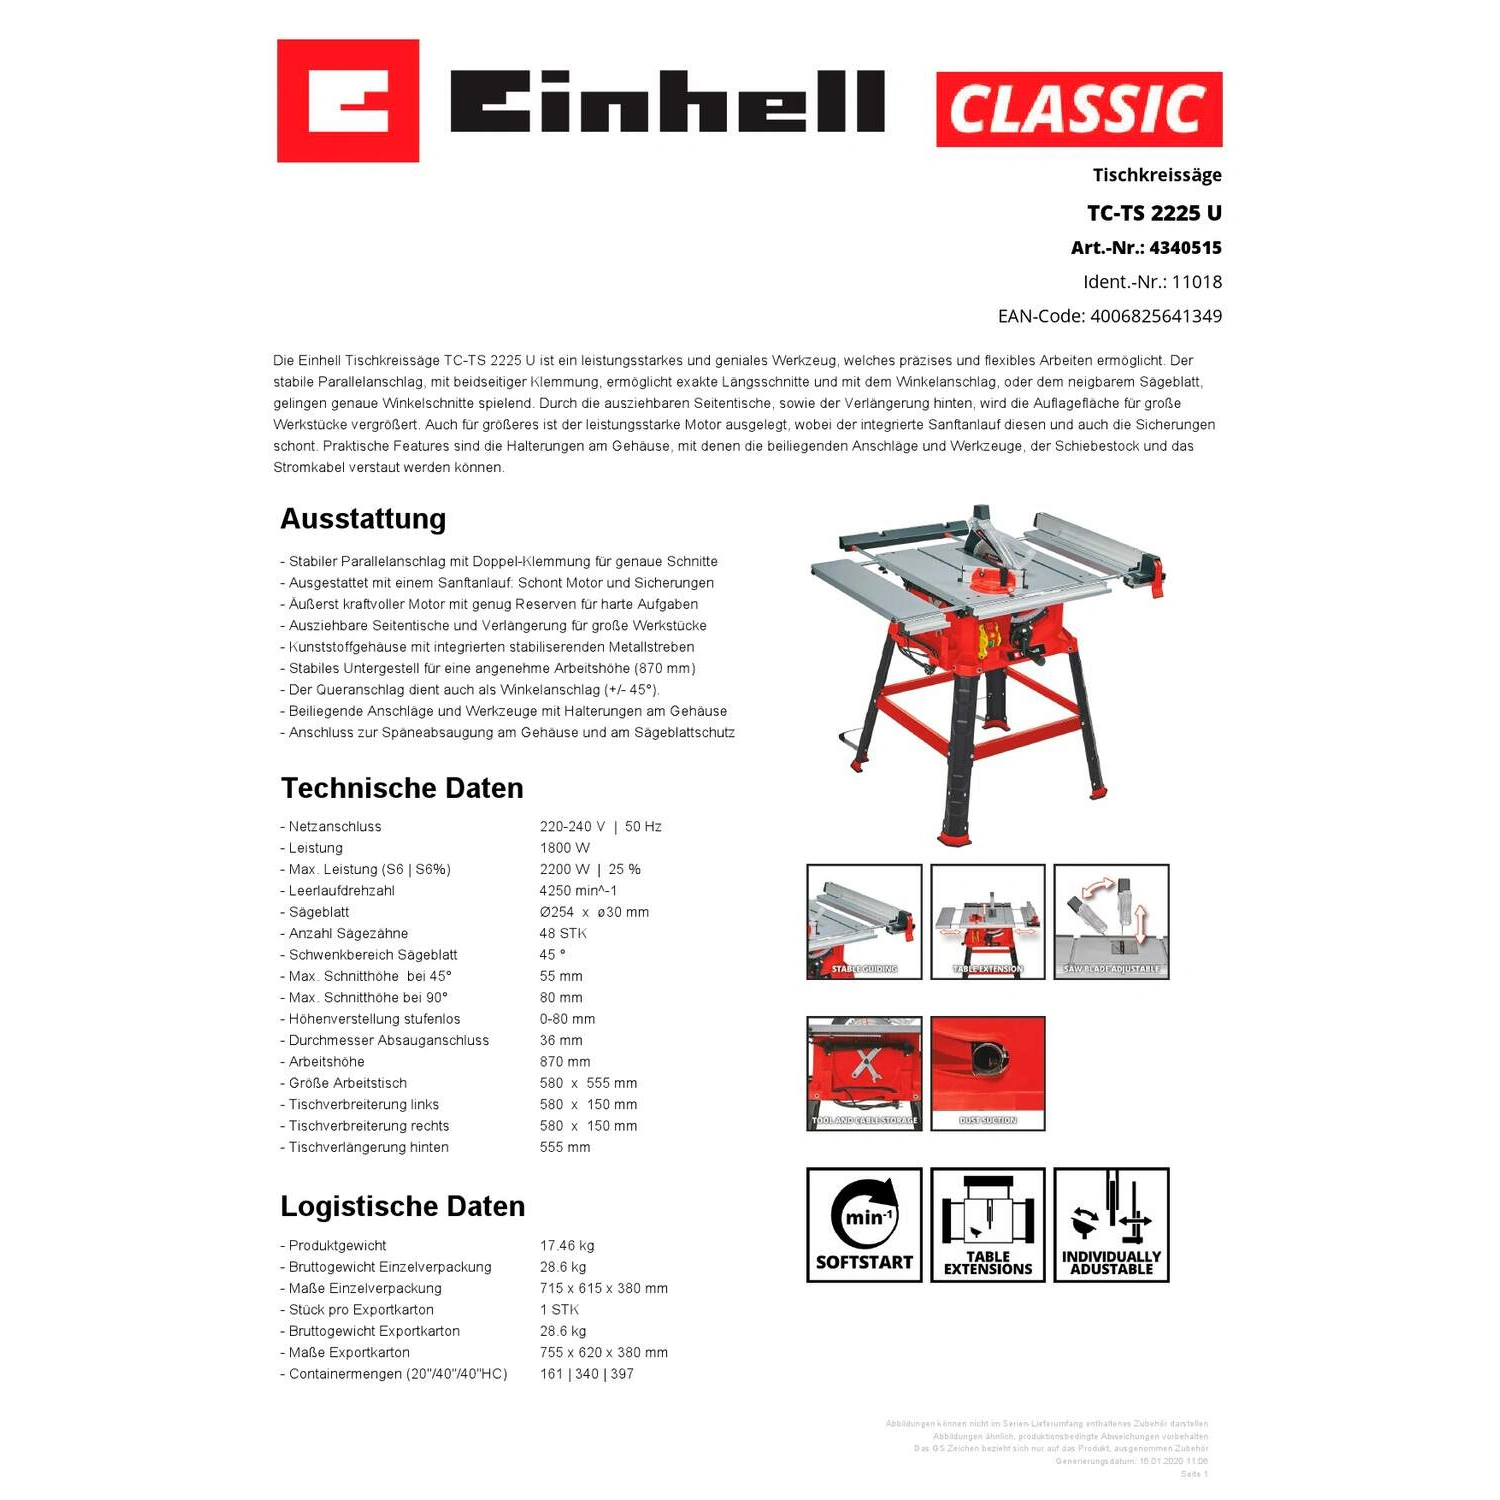 EINHELL Tischkreissäge »Einhell Classic«, 1800 254 mm W, Ø-Sägeblatt